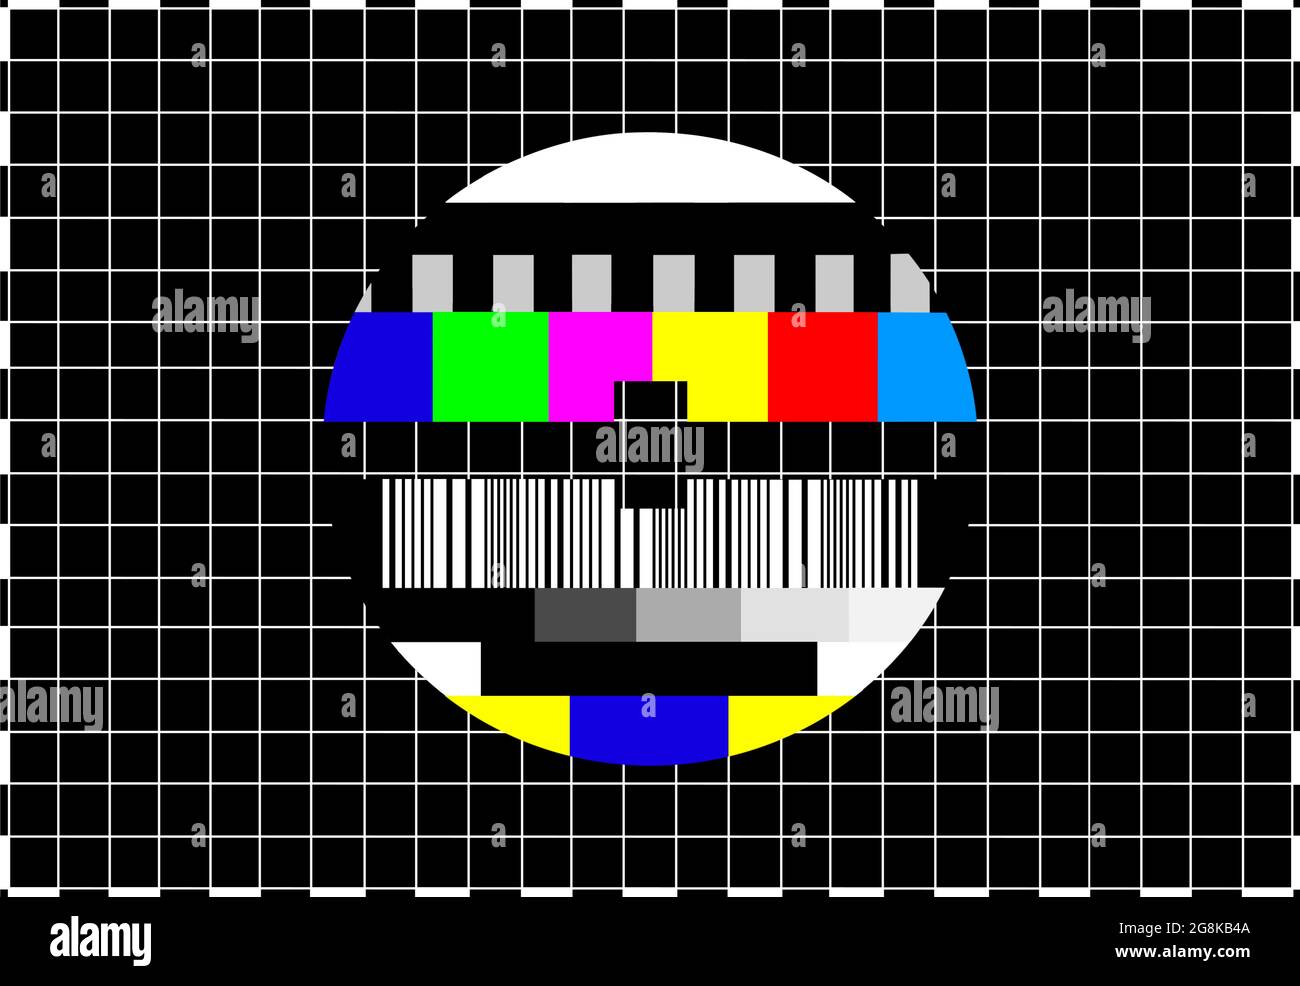 Vintage Coloful TV Testmuster Bildschirm, kein Signal gefunden, abstraktes Design Stockfoto